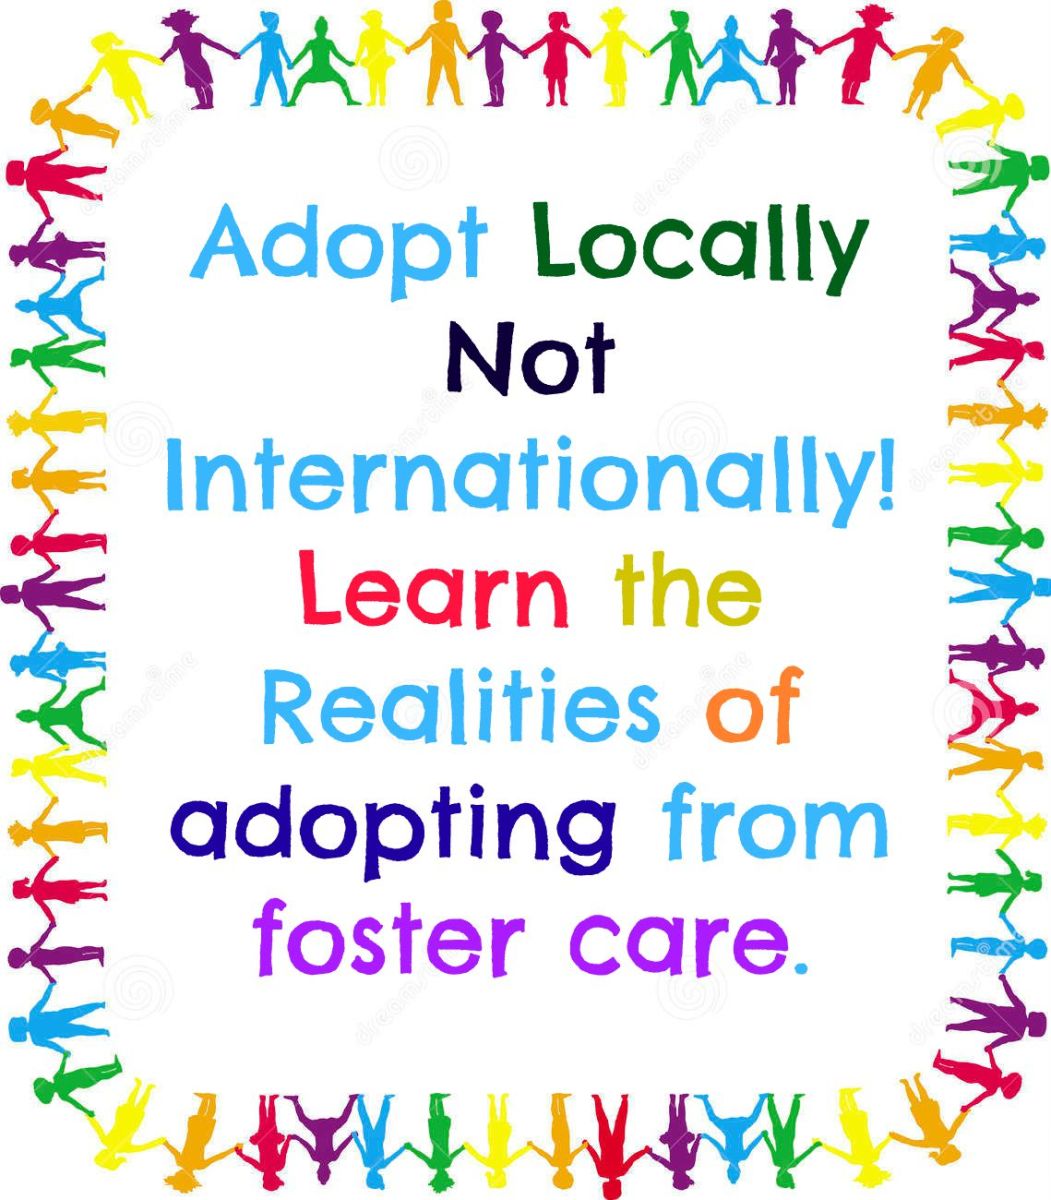 Adopt Locally Not Internationally!